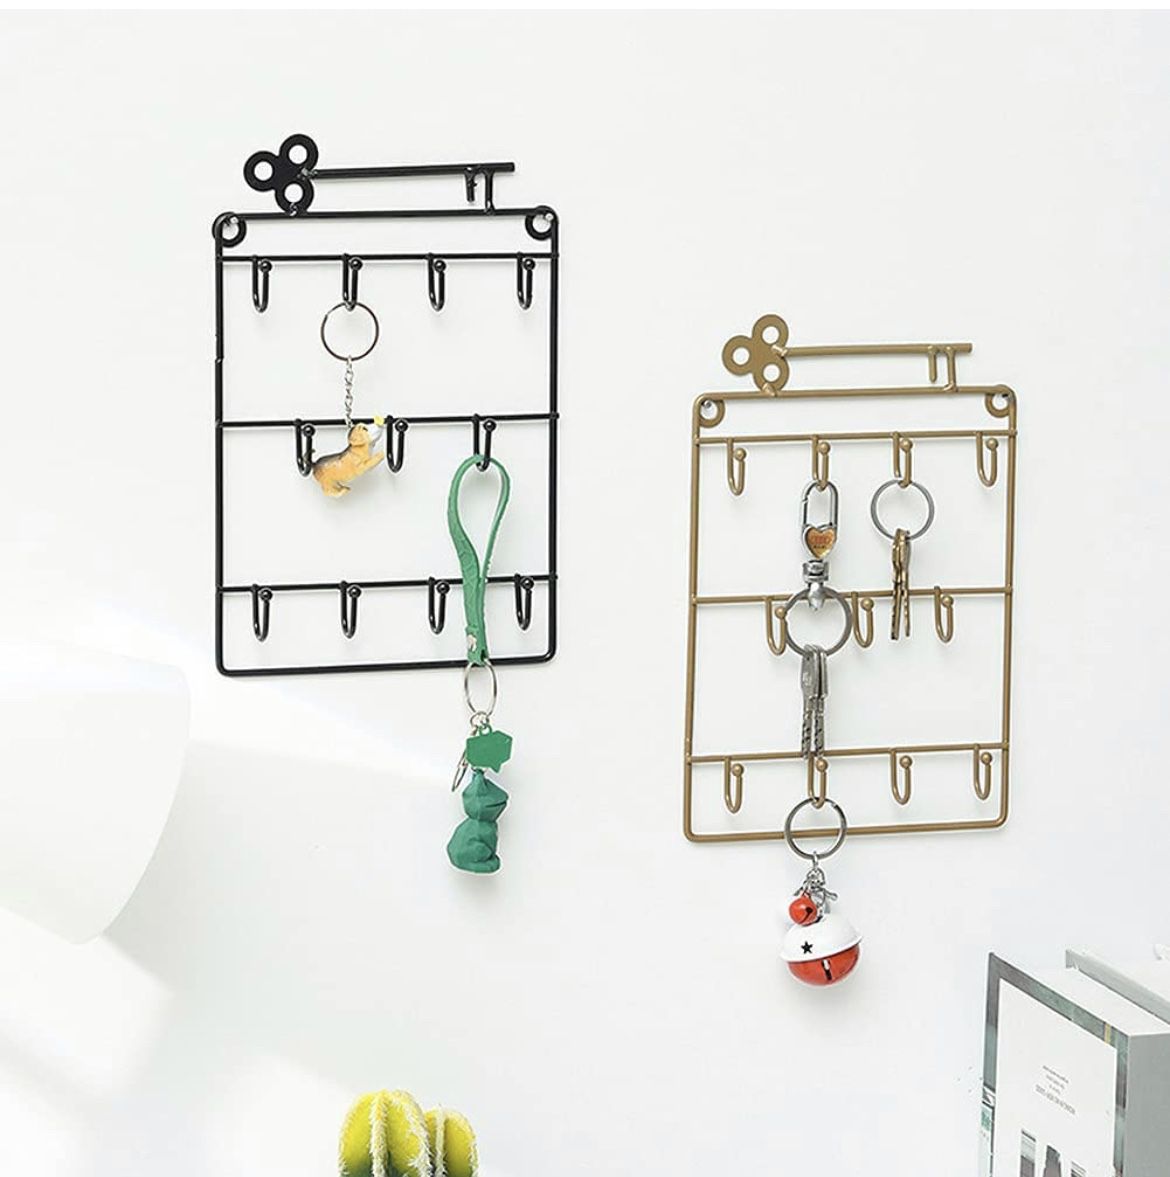 Feilifan Key Rack,Decorative Wall Mounted Holder with 11 Key Hook Key Rack Holder Organizer Metal Key Holder